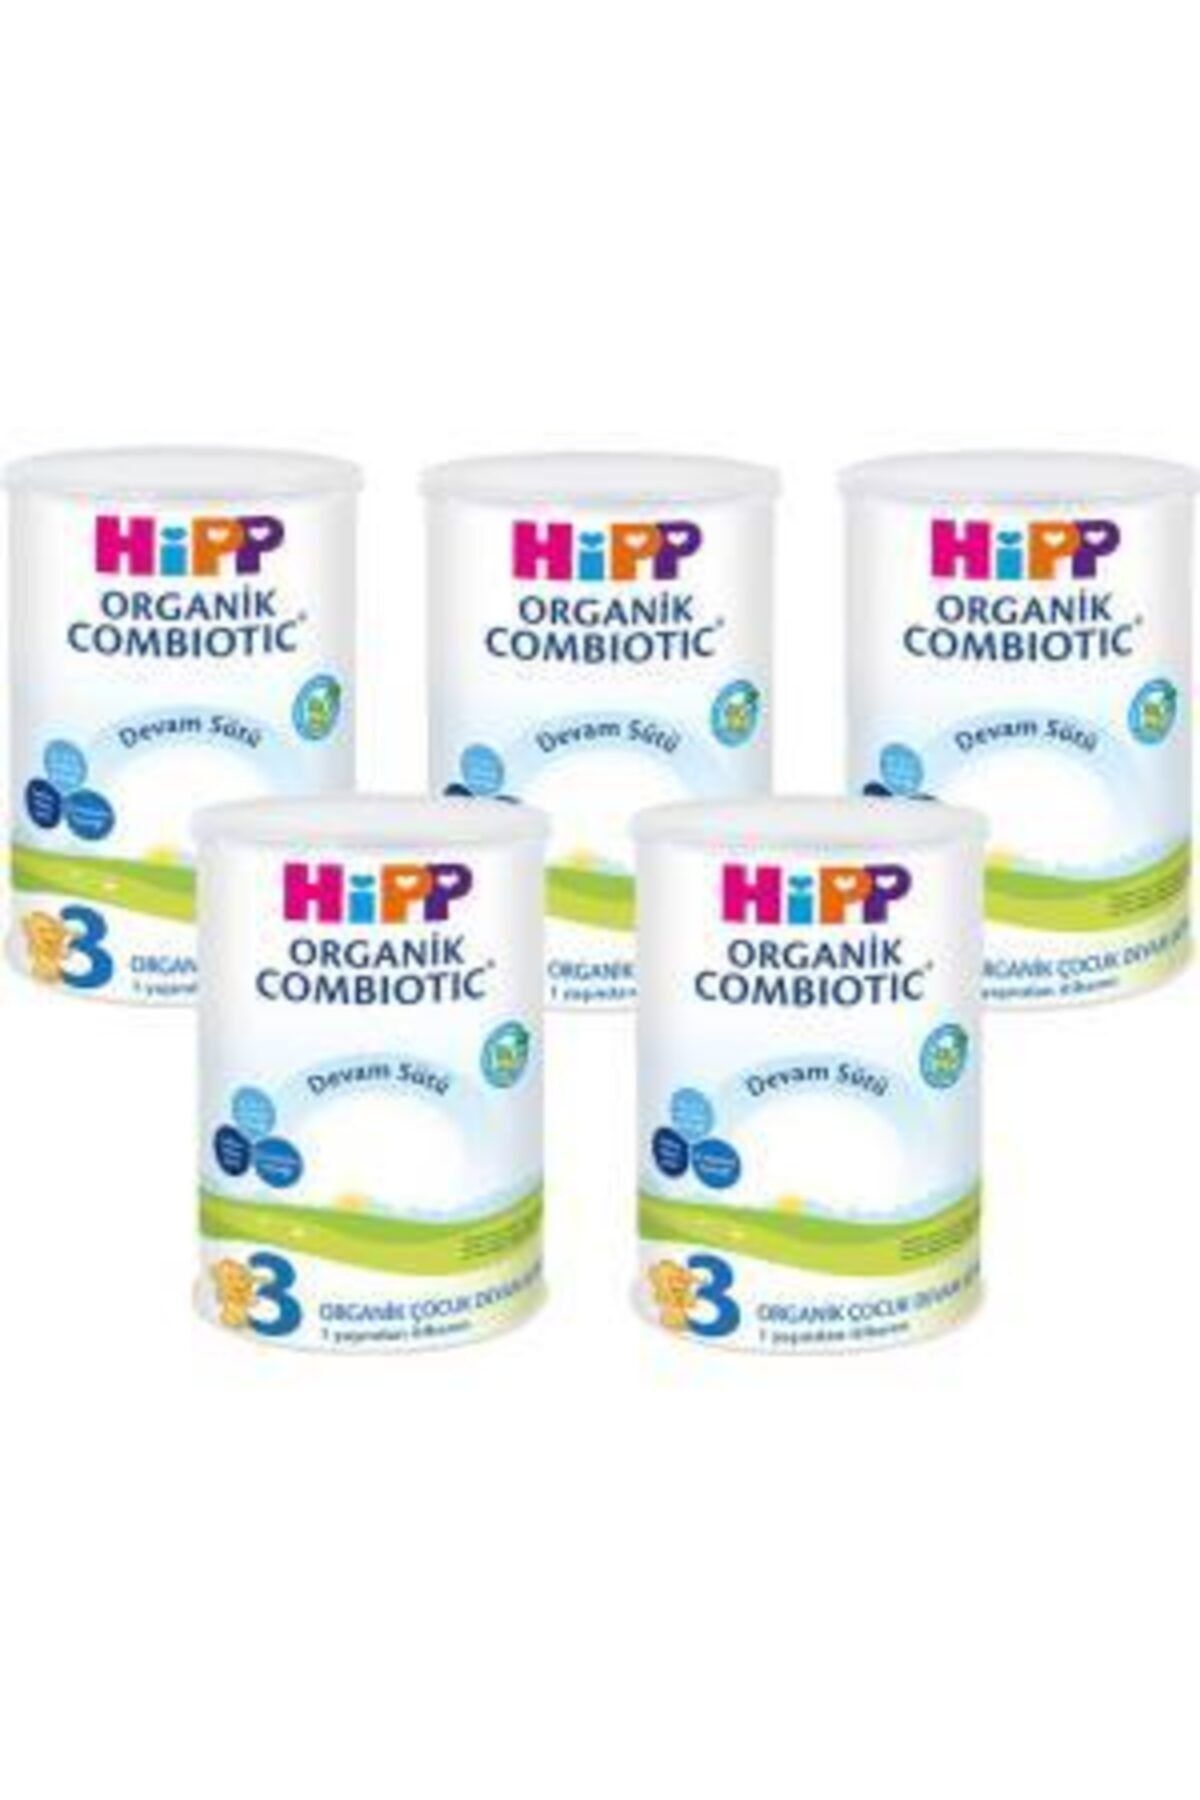 Hipp 3 Organik Combiotic Devam Sütü 350 Gr X 5 Adet